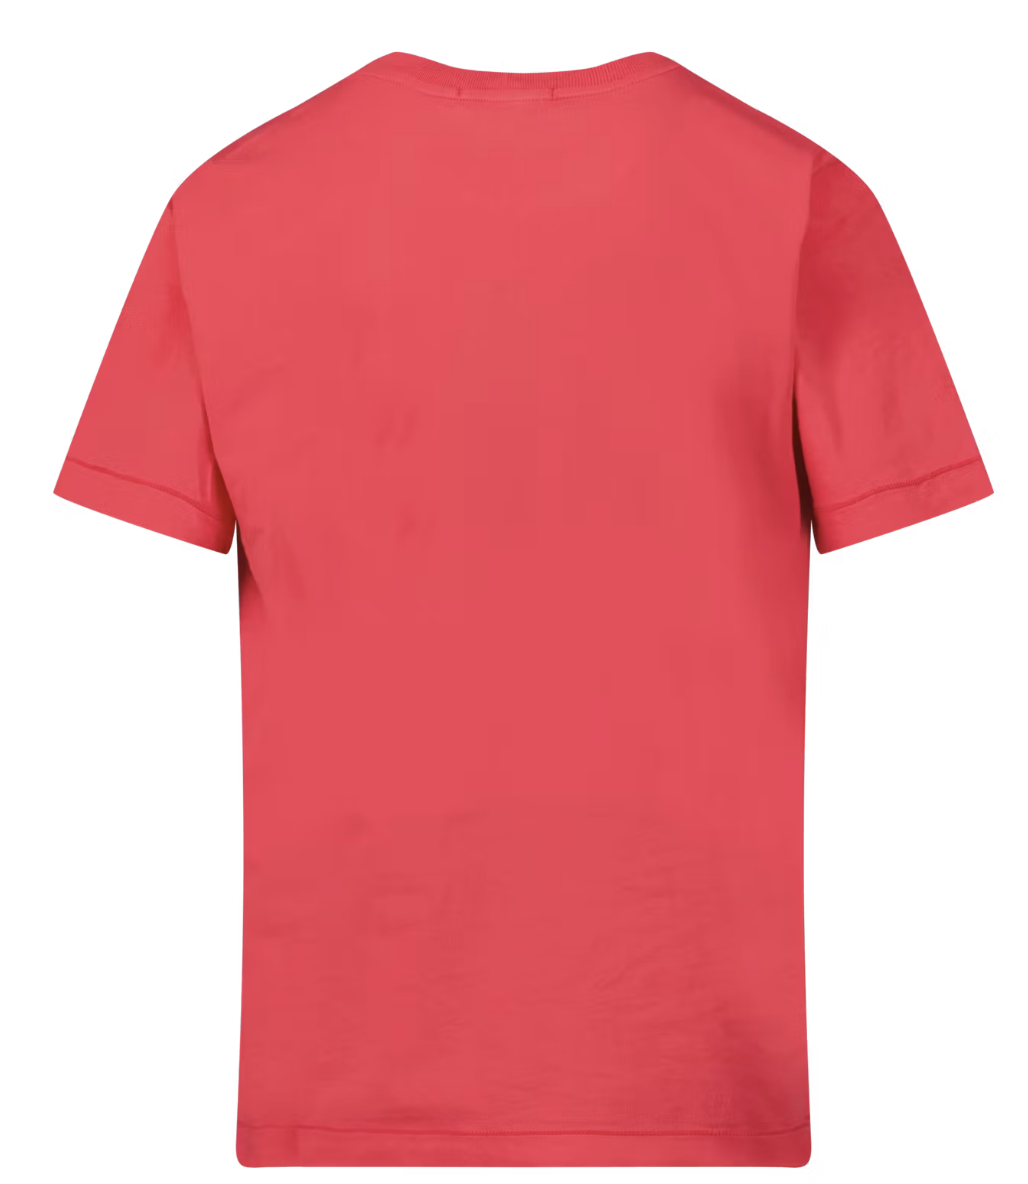 Stone Island t-shirt red